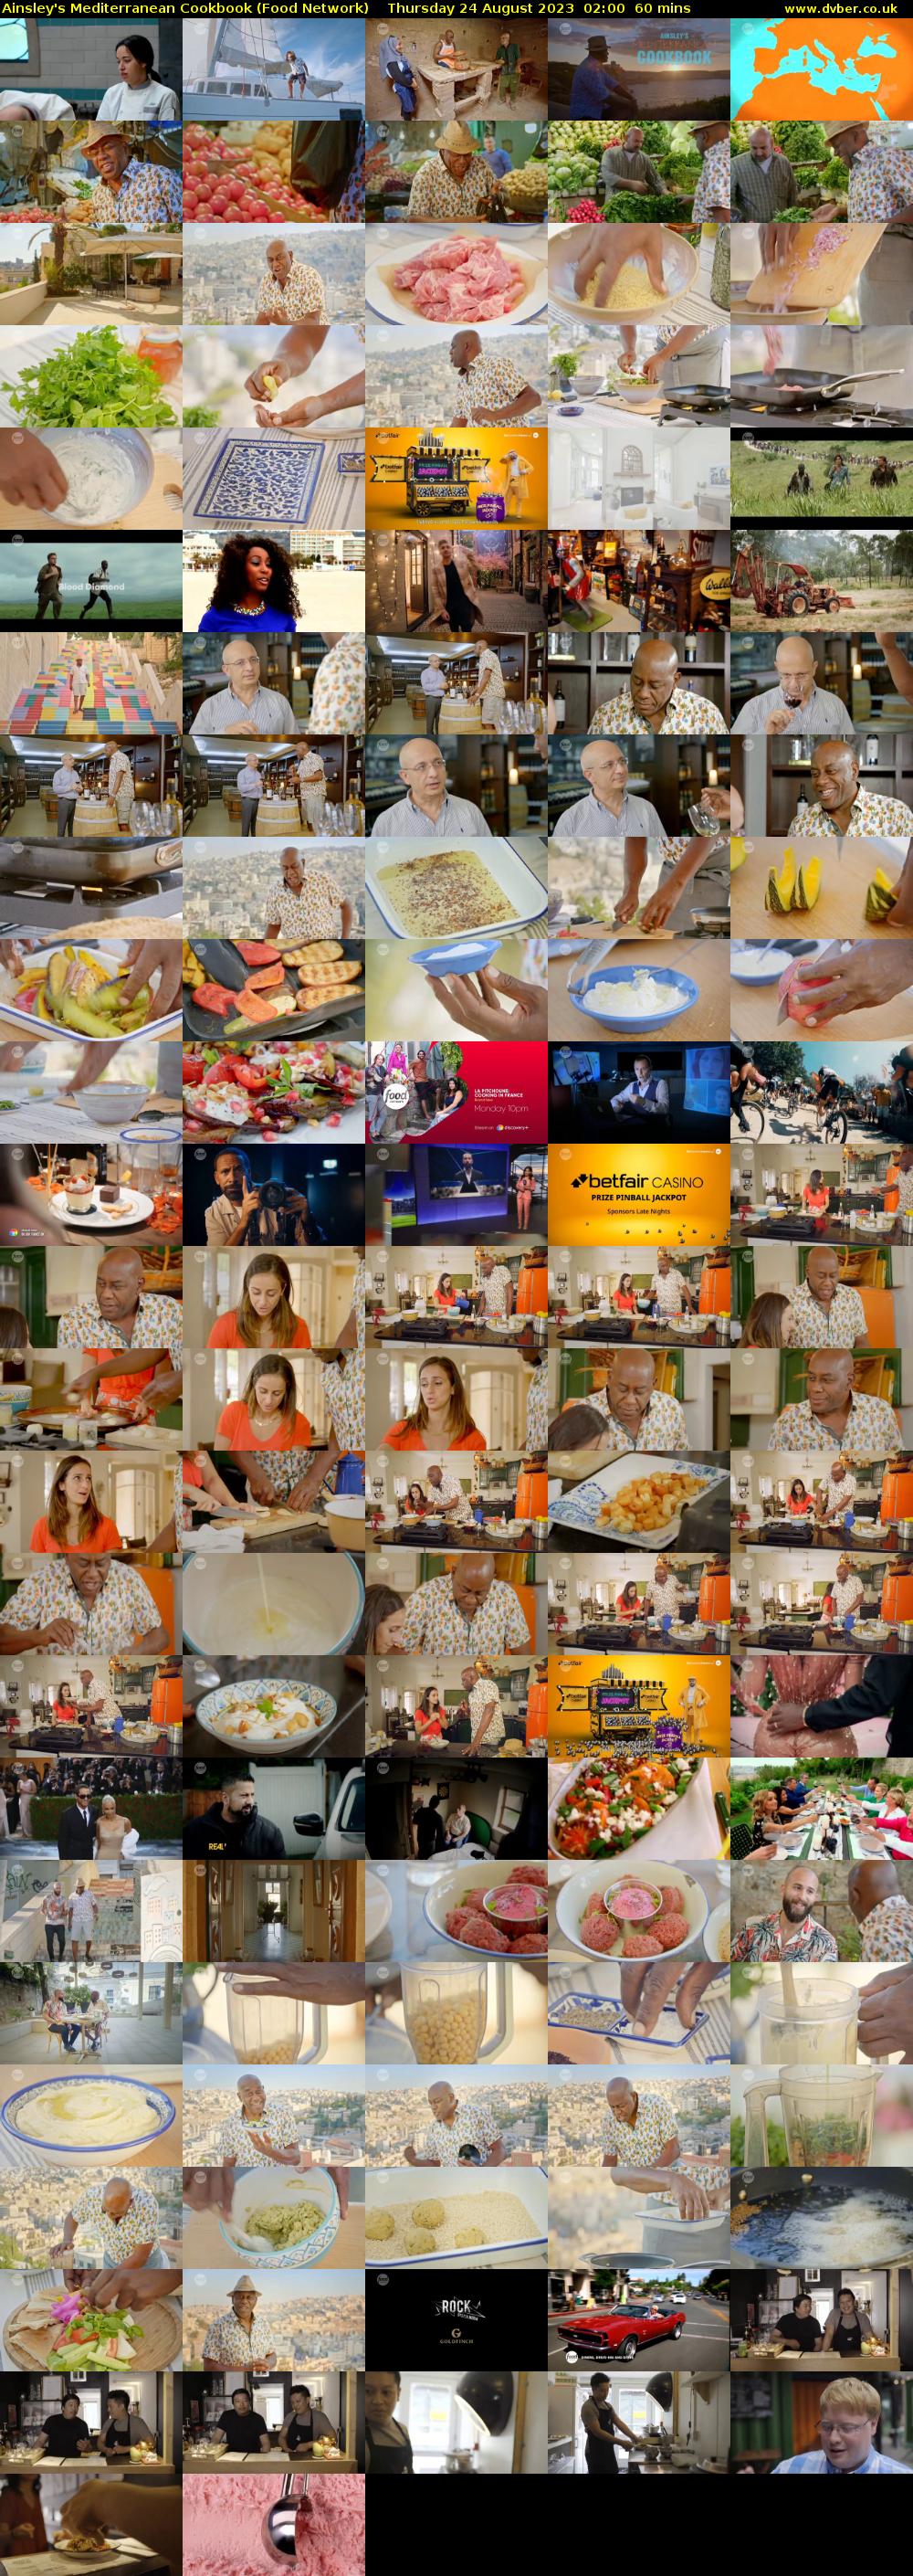 Ainsley's Mediterranean Cookbook (Food Network) Thursday 24 August 2023 02:00 - 03:00